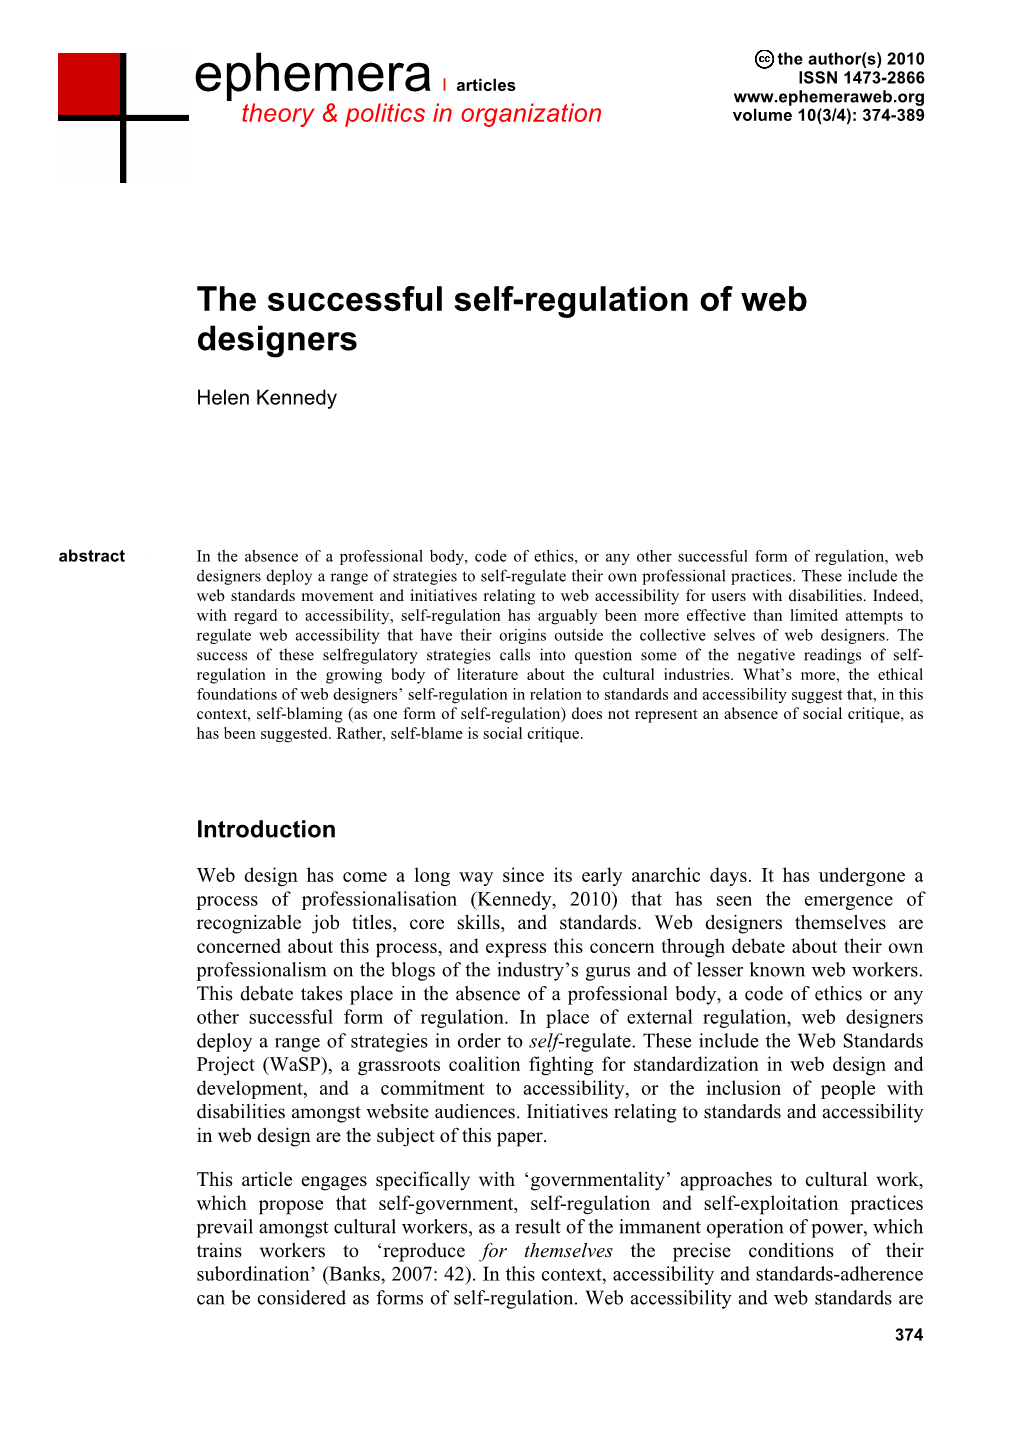 The Successful Self-Regulation of Web Designers